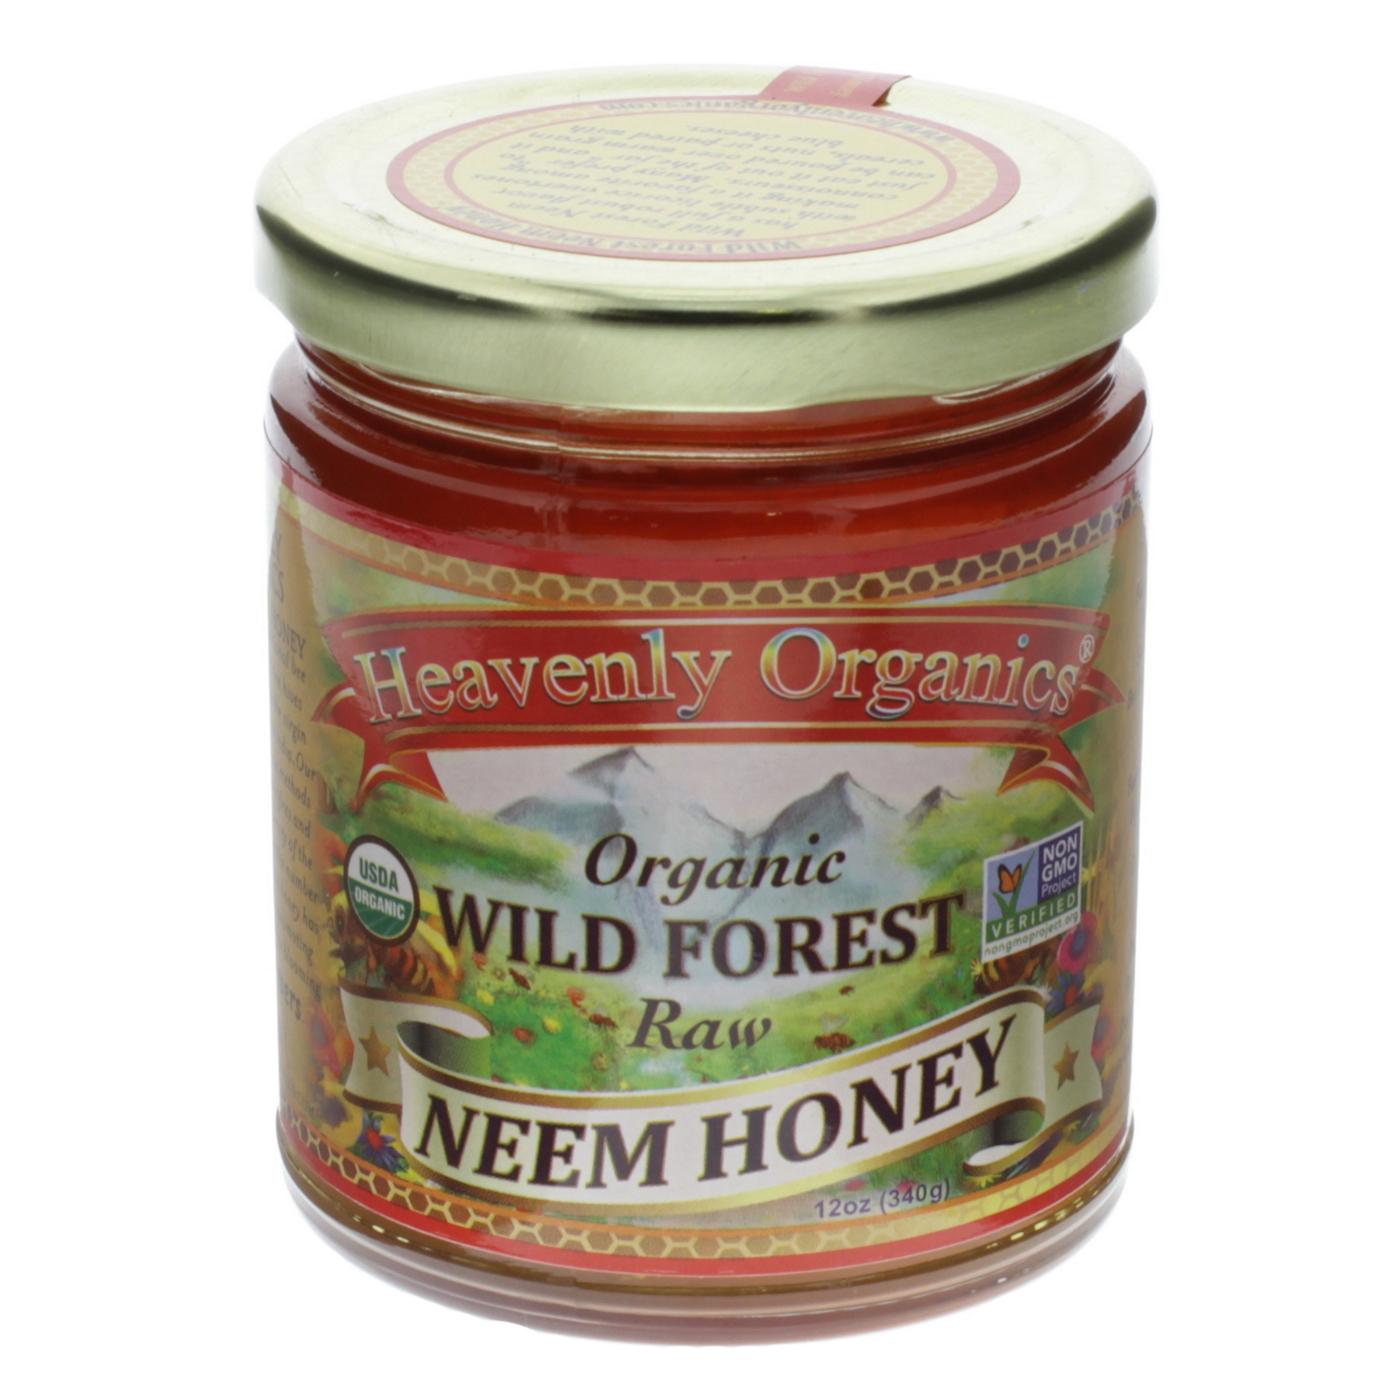 Heavenly Organics Wild Forest Raw Neem Honey; image 1 of 2